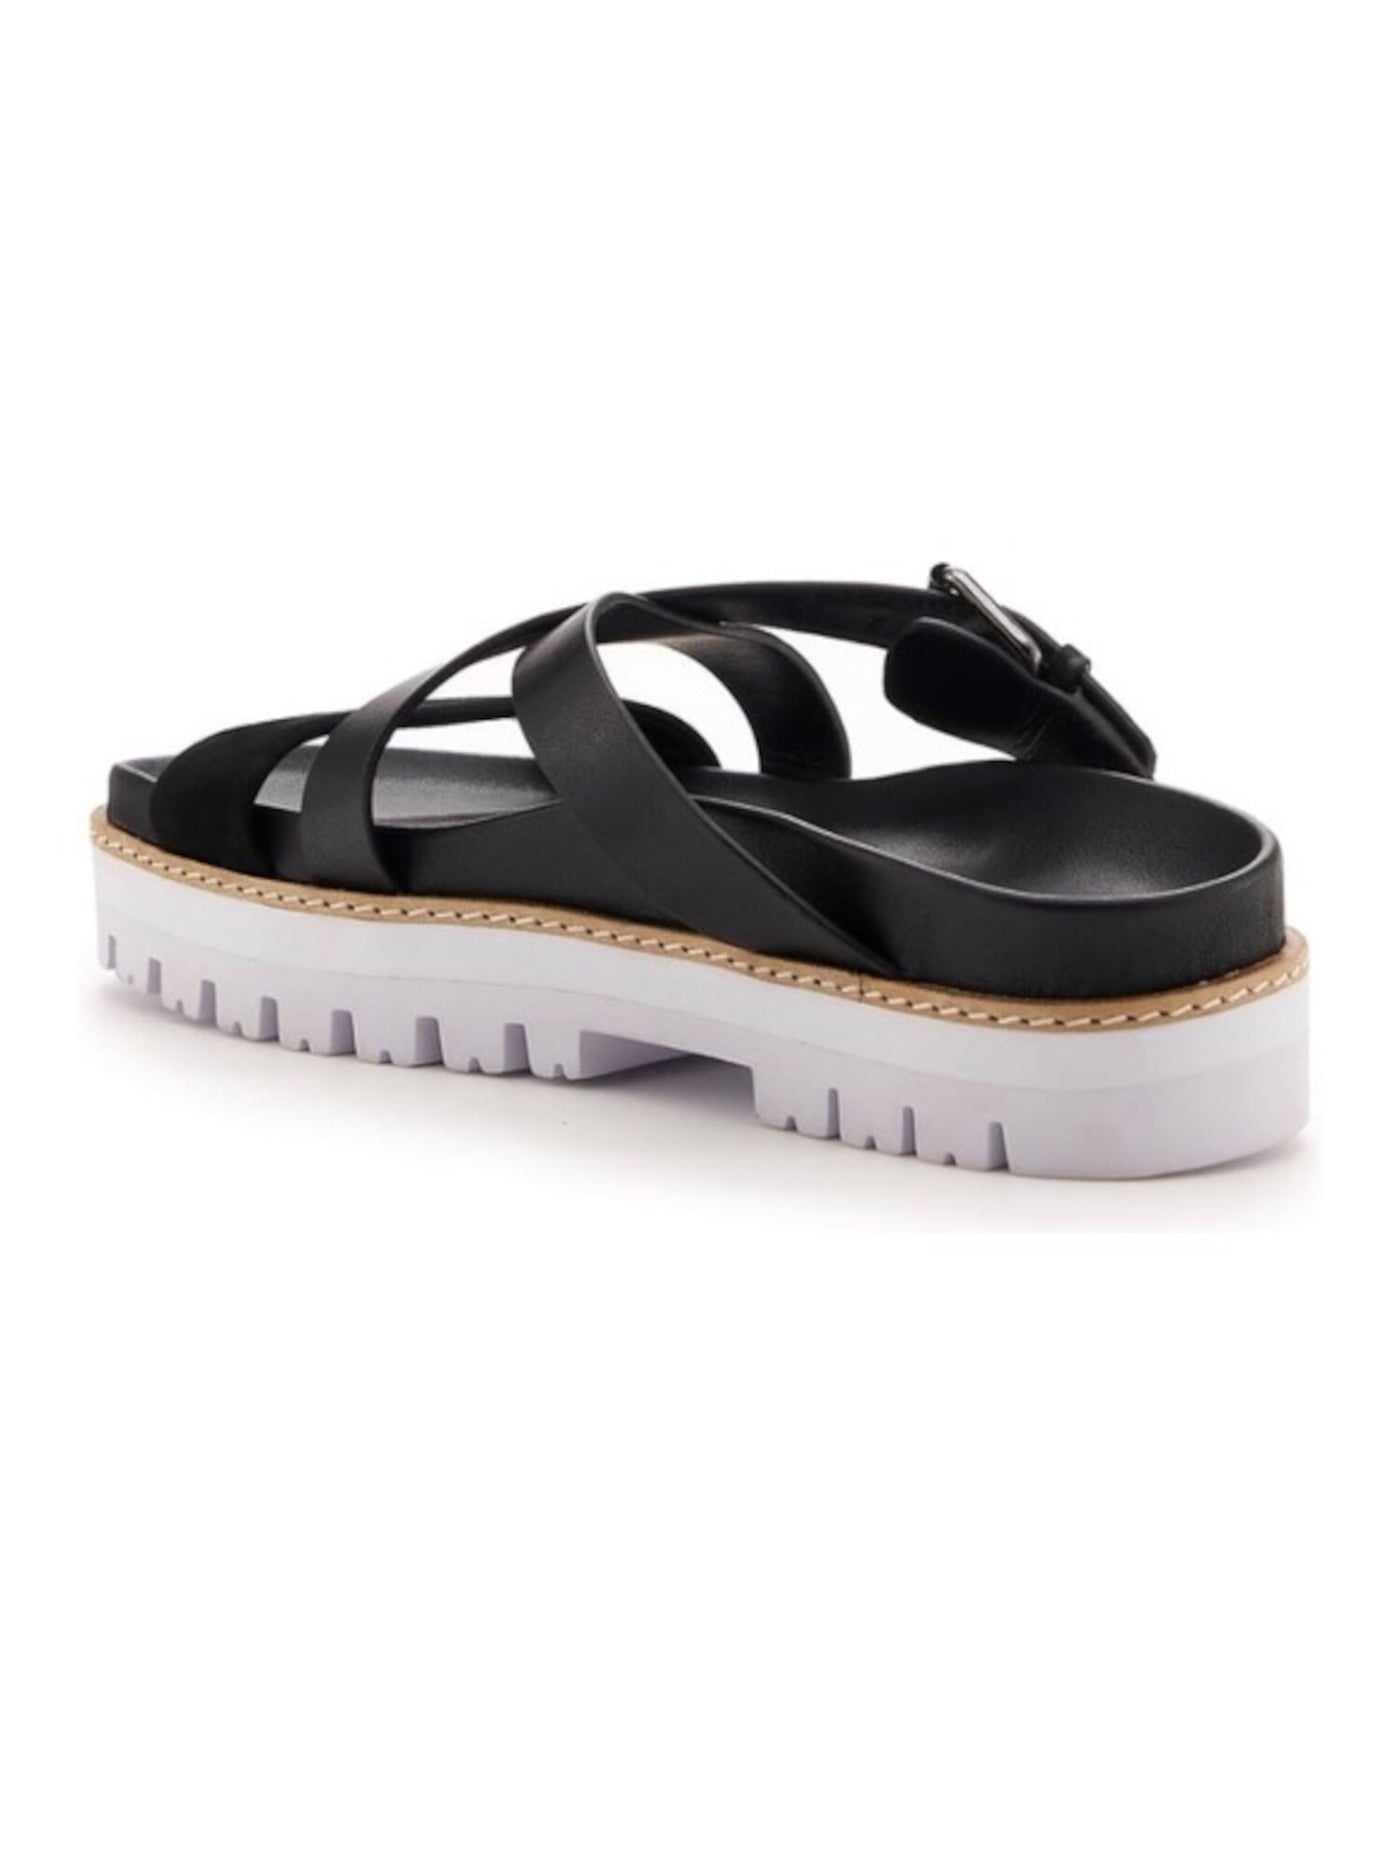 BOTKIER Womens Black Adjustable Strap Strappy Jupiter Round Toe Platform Slip On Leather Sandals Shoes 8